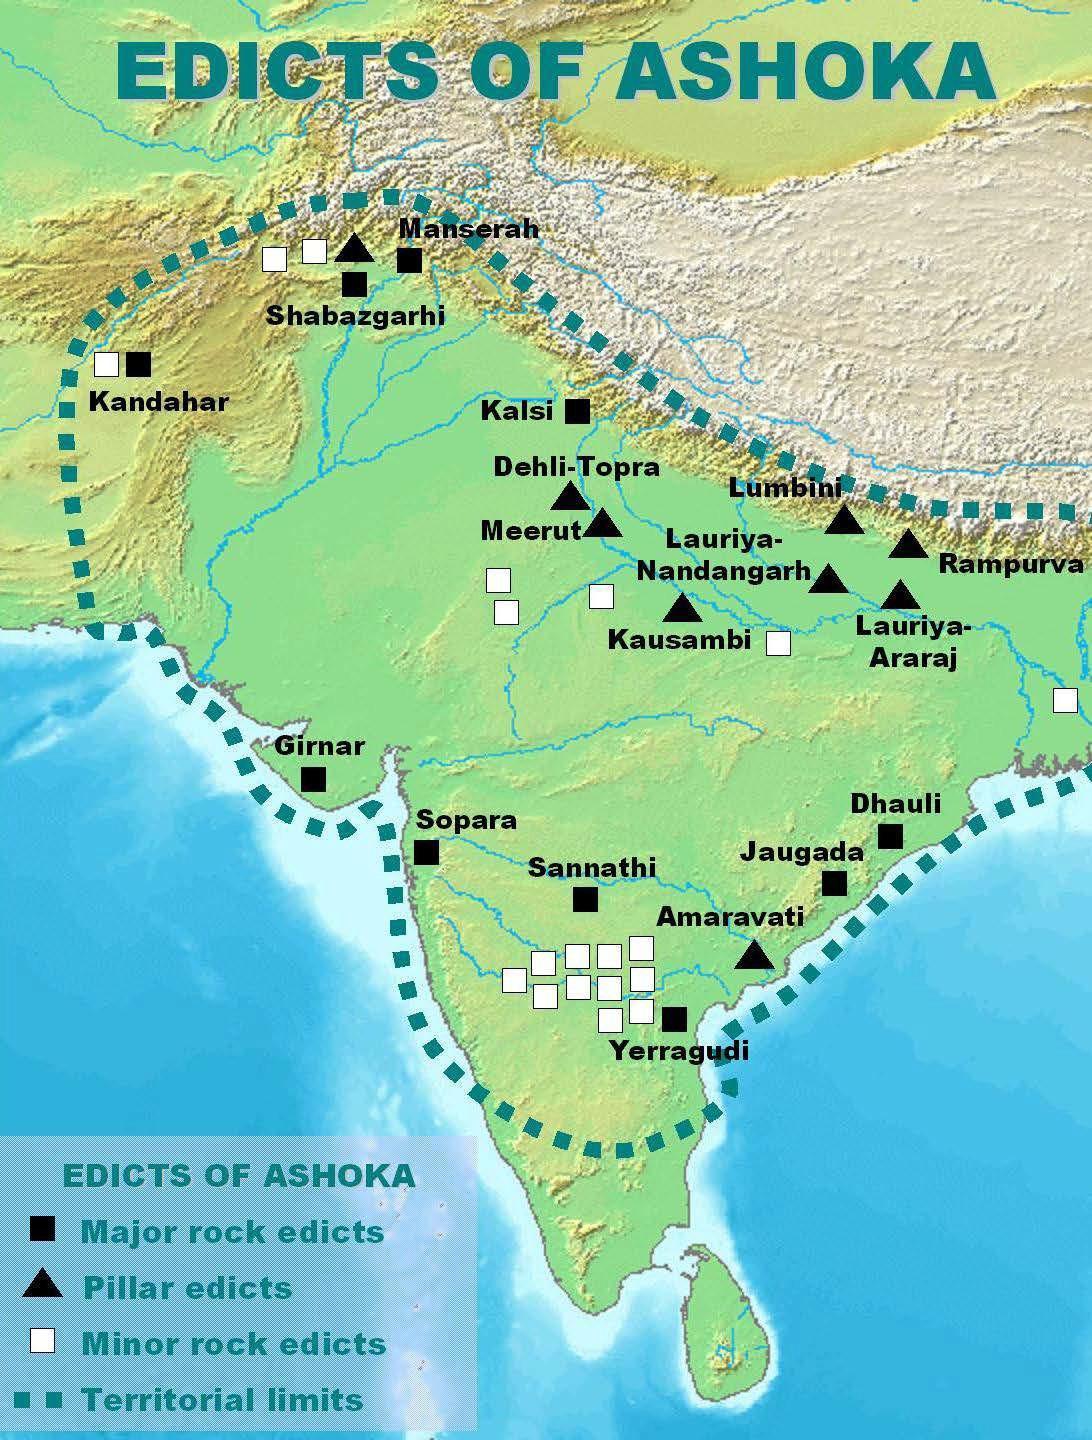 Map of Locations of the rock edicts and pillars of King Ashoka